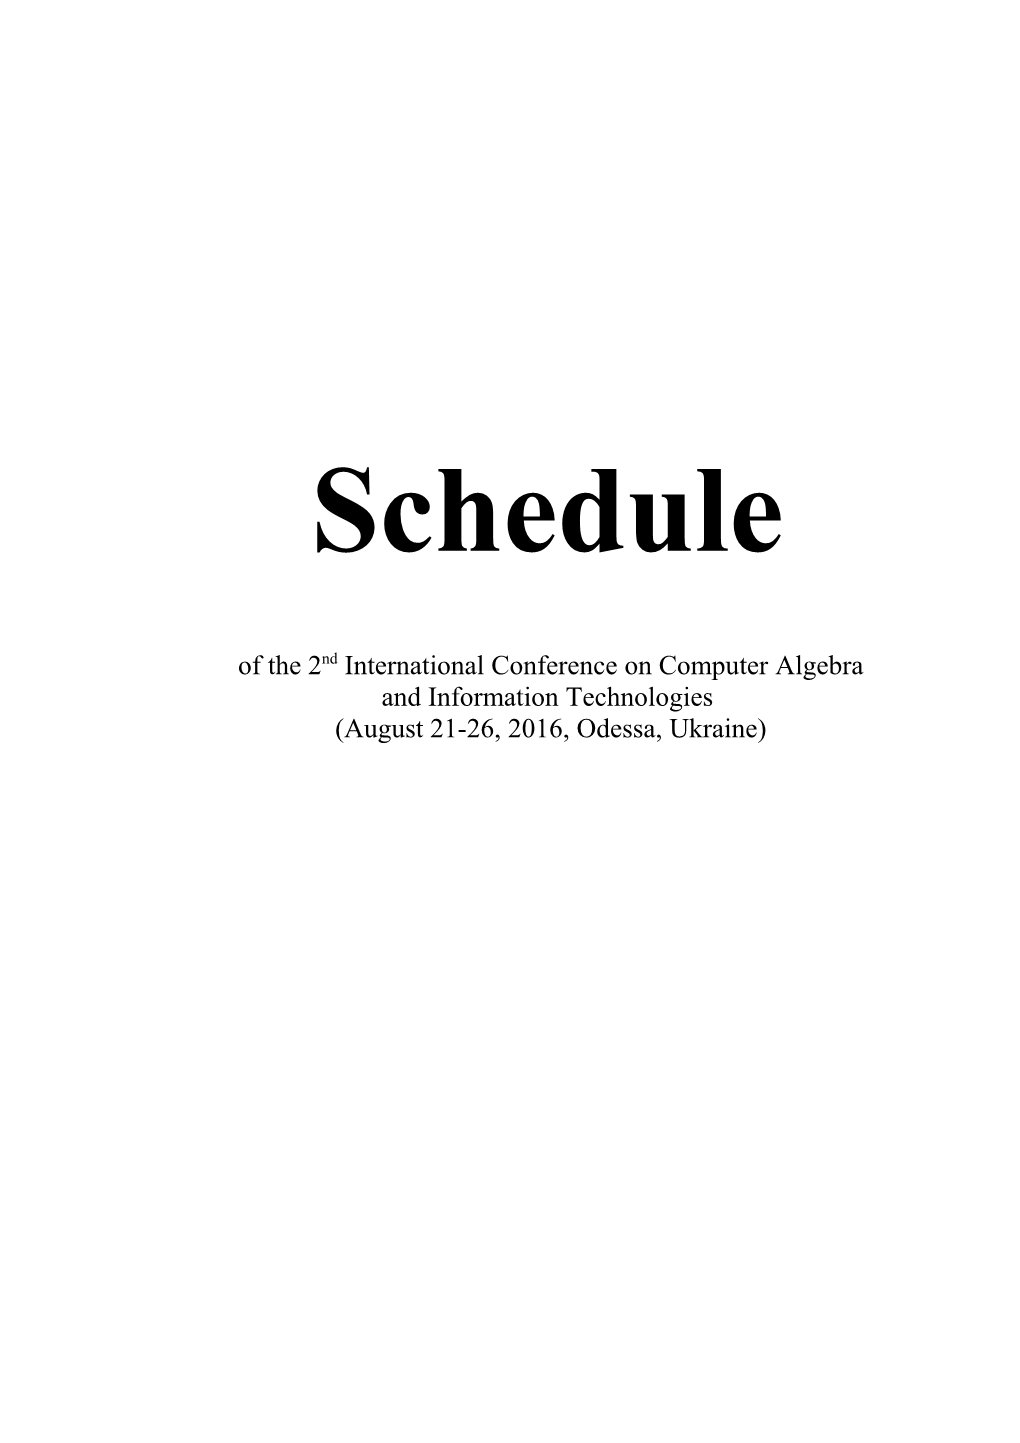 Tentative Schedule of the International Algebraic Conference Dedicated